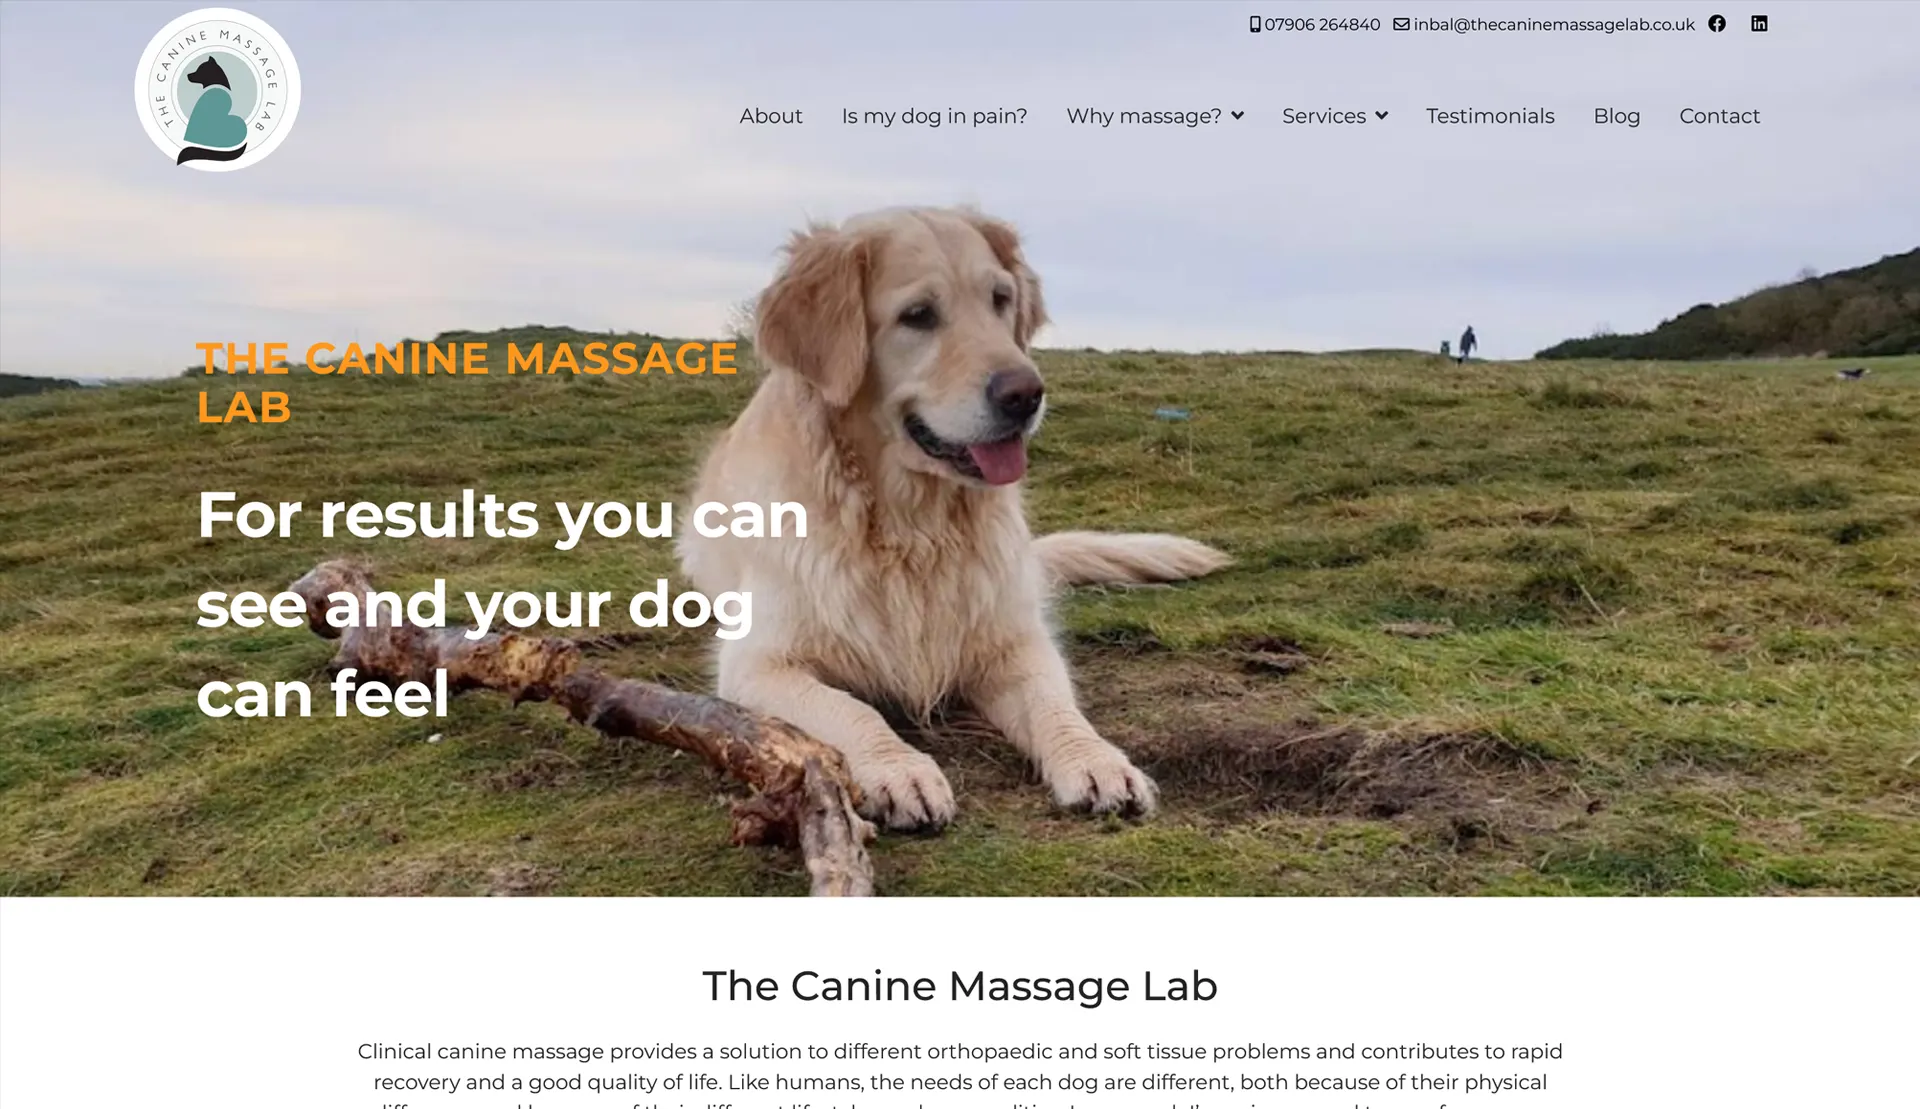 The Canine Massage Lab